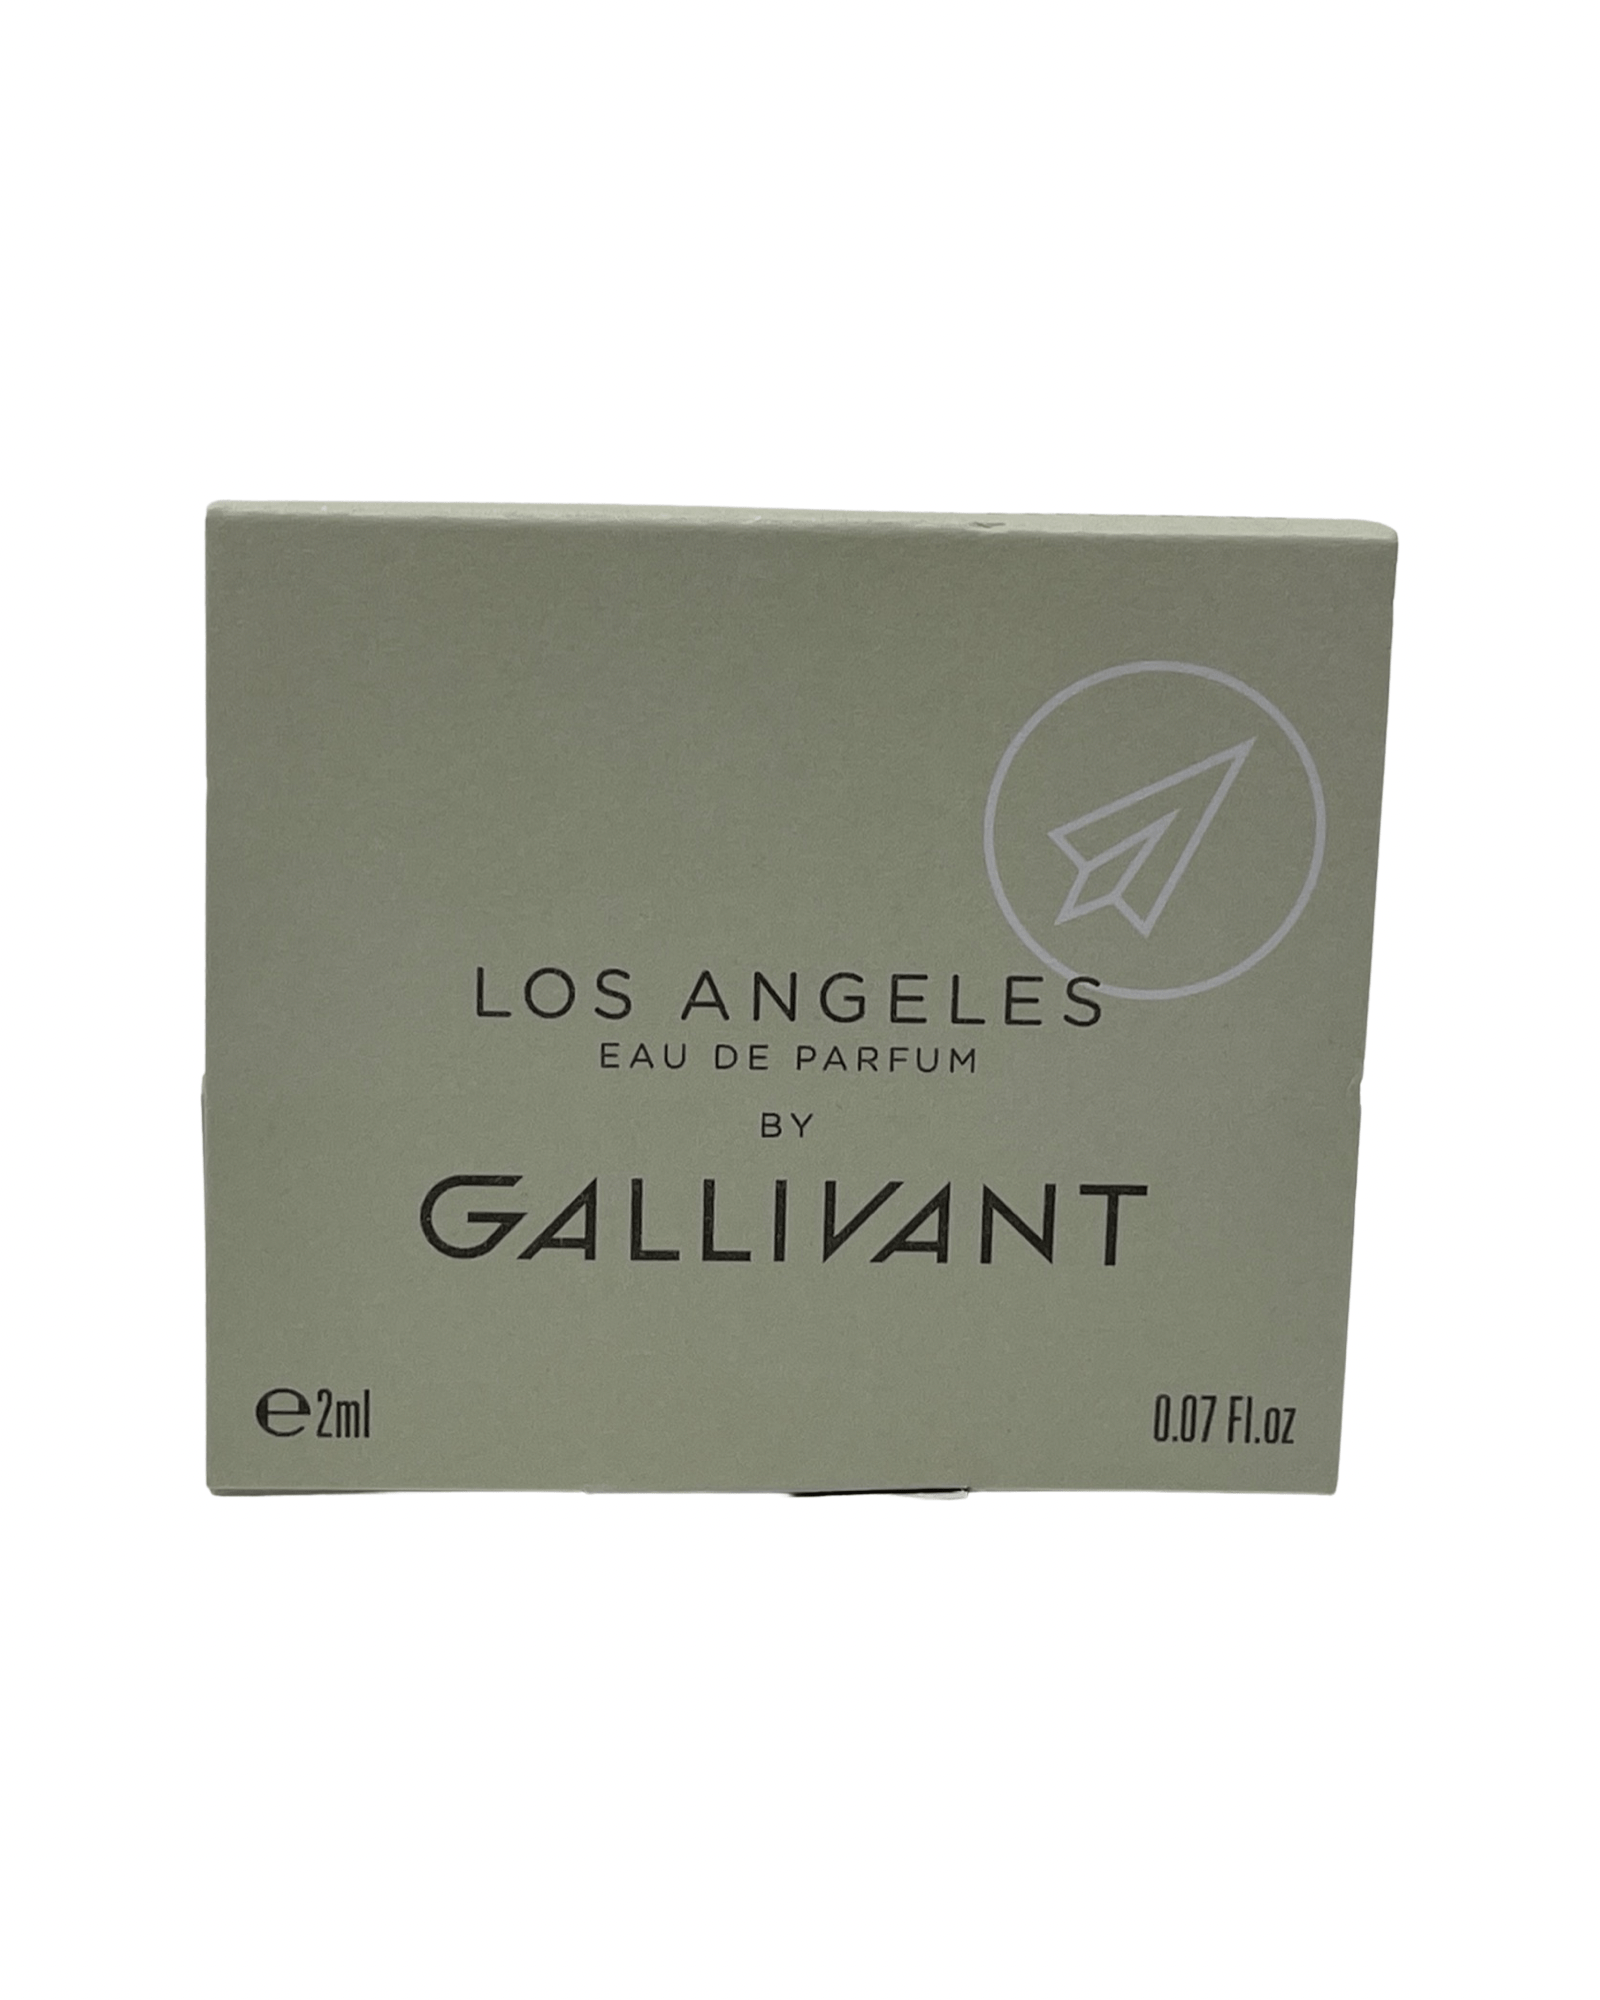 Gallivant - Los Angeles - 2ml.